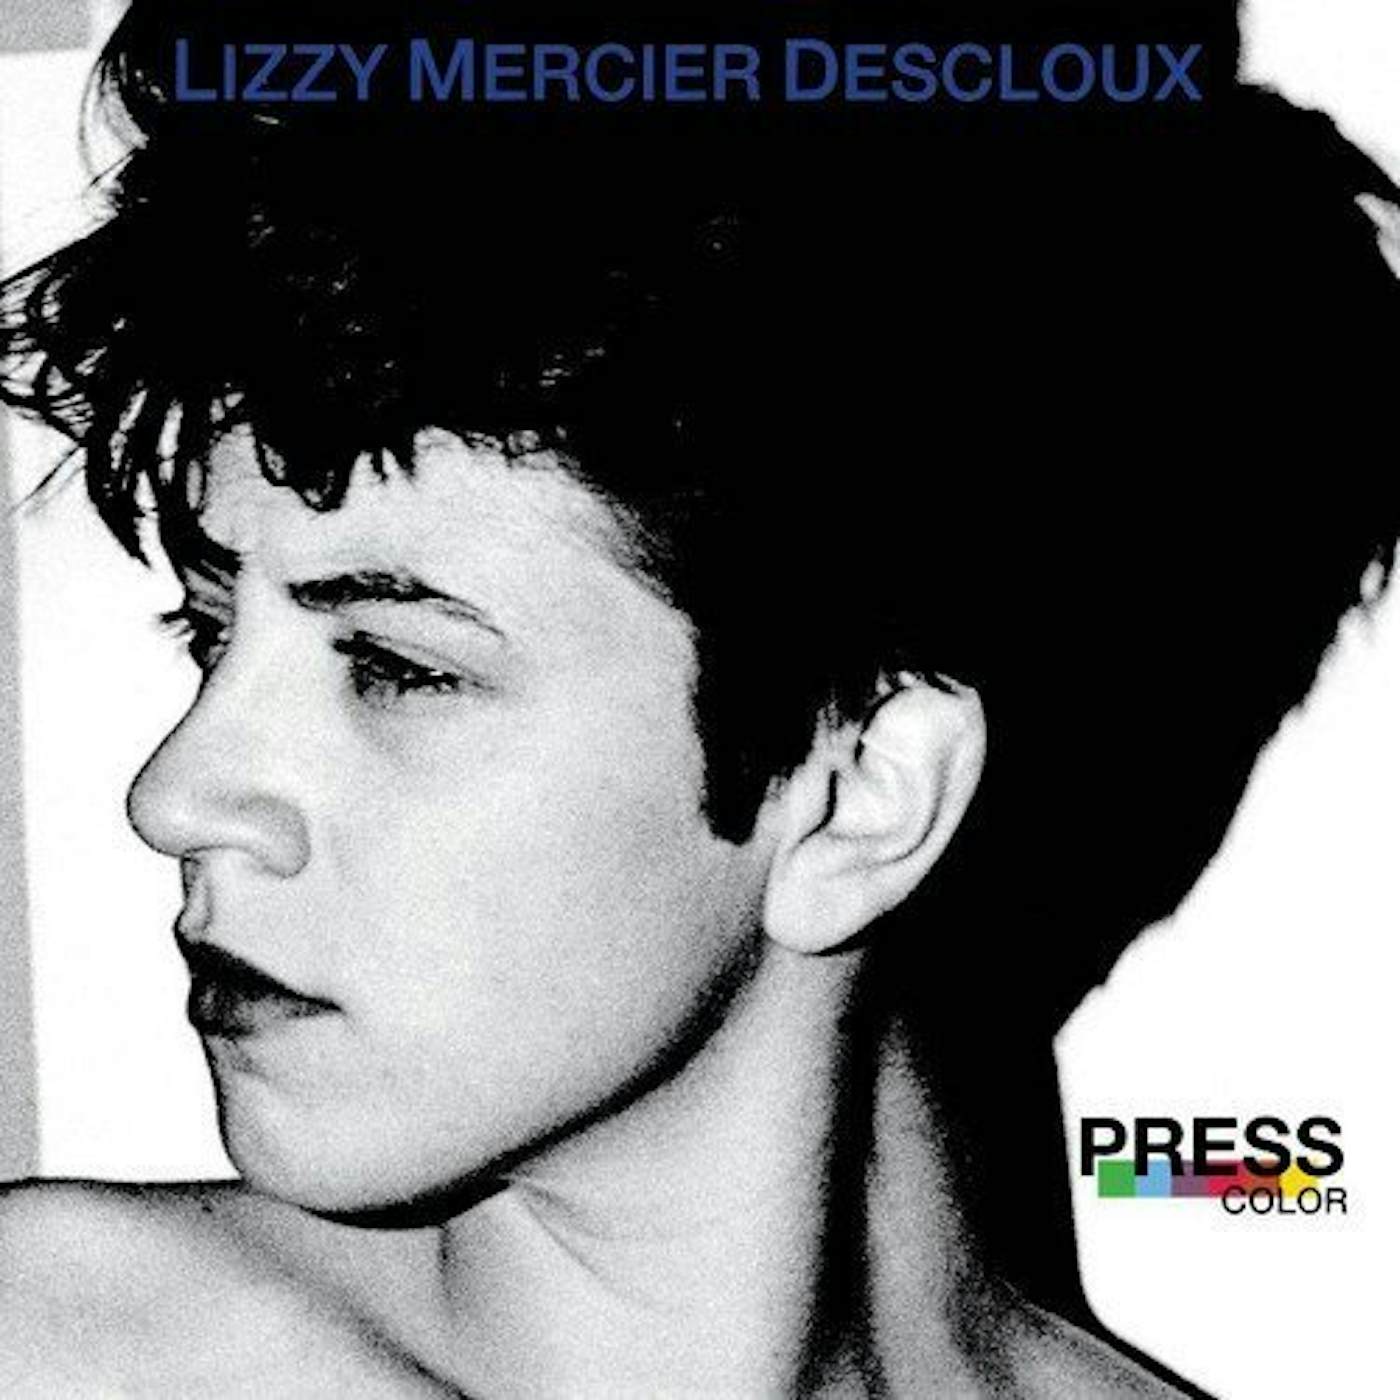 Lizzy Mercier Descloux PRESS COLOR CD